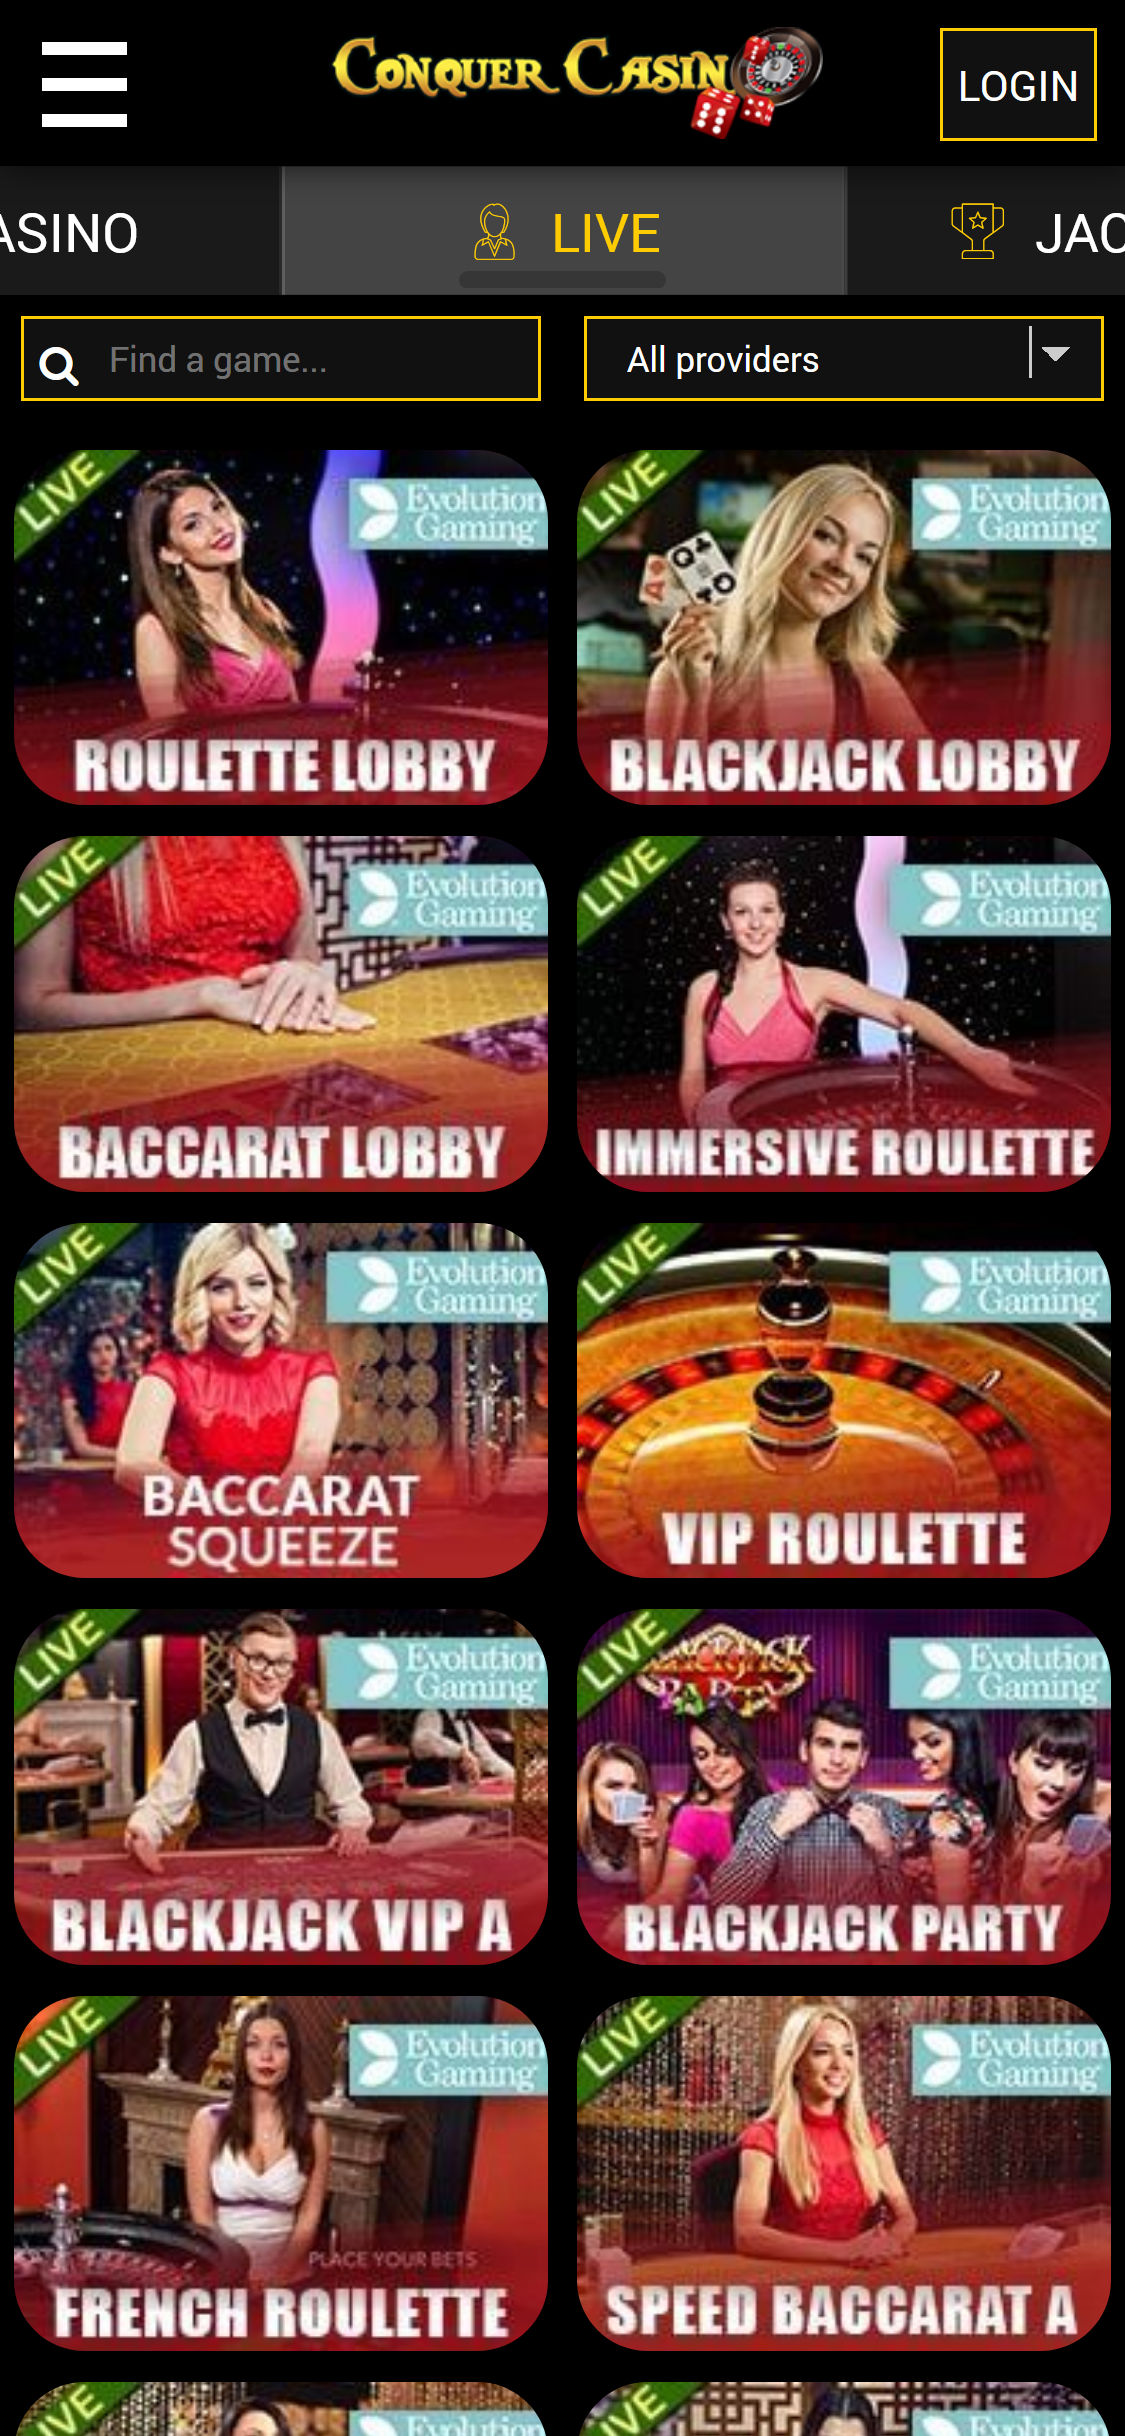 Conquer Casino Mobile Live Dealer Games Review